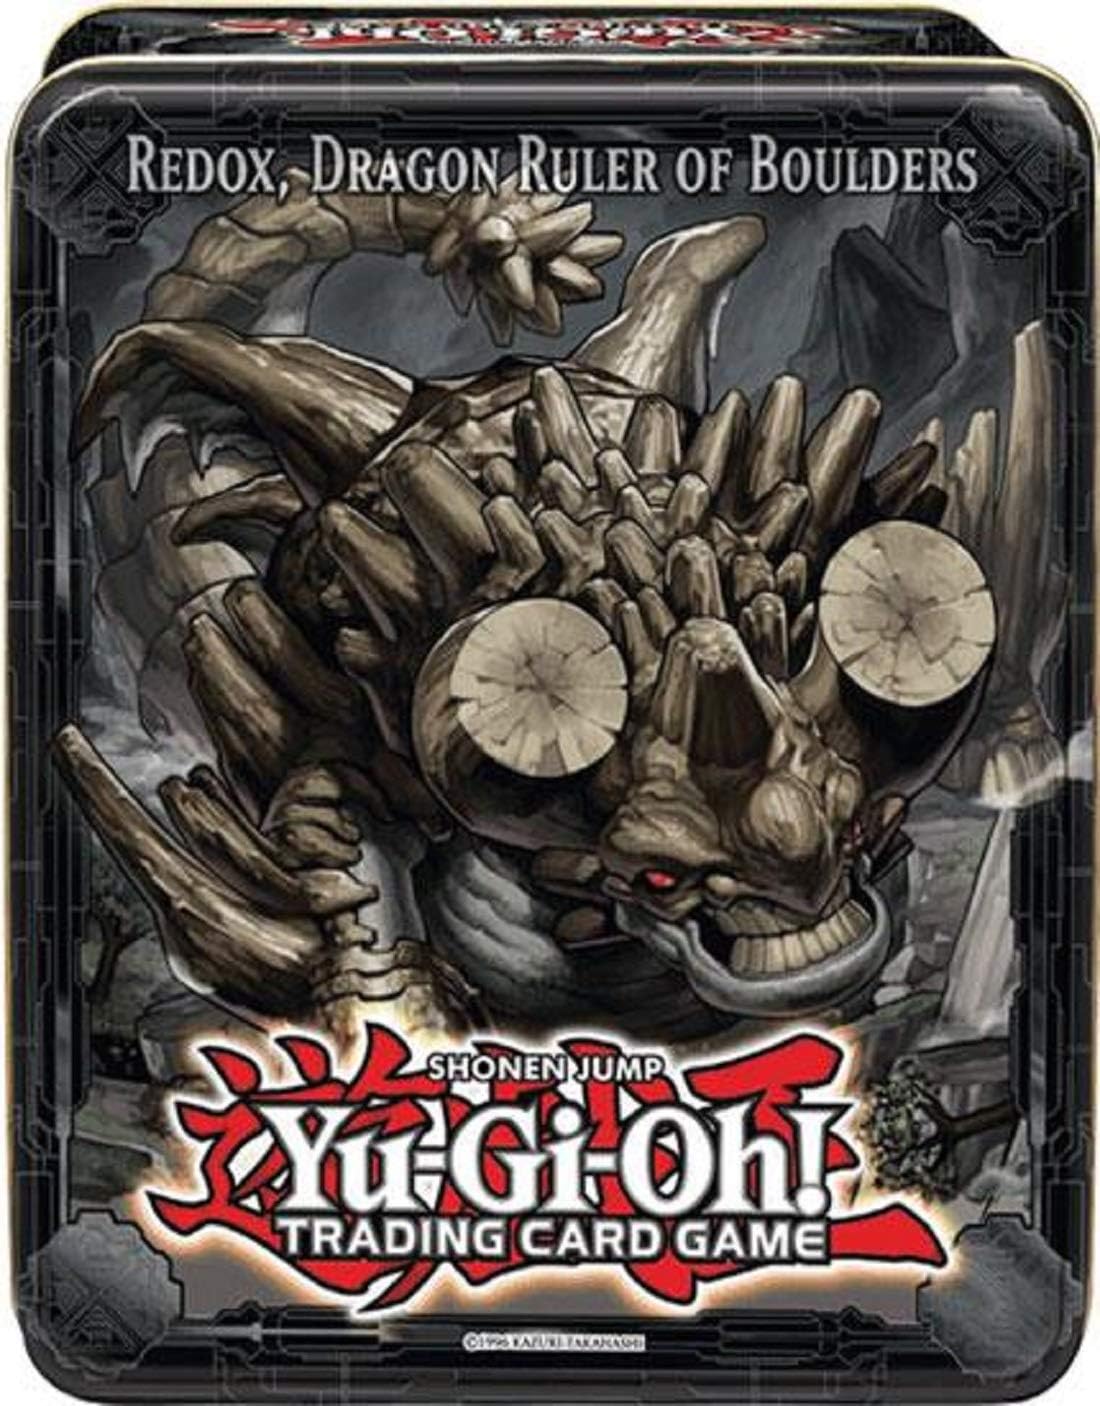 Yugioh TCG Collectible Tin - 2013 Redox, Dragon Ruler of Boulders